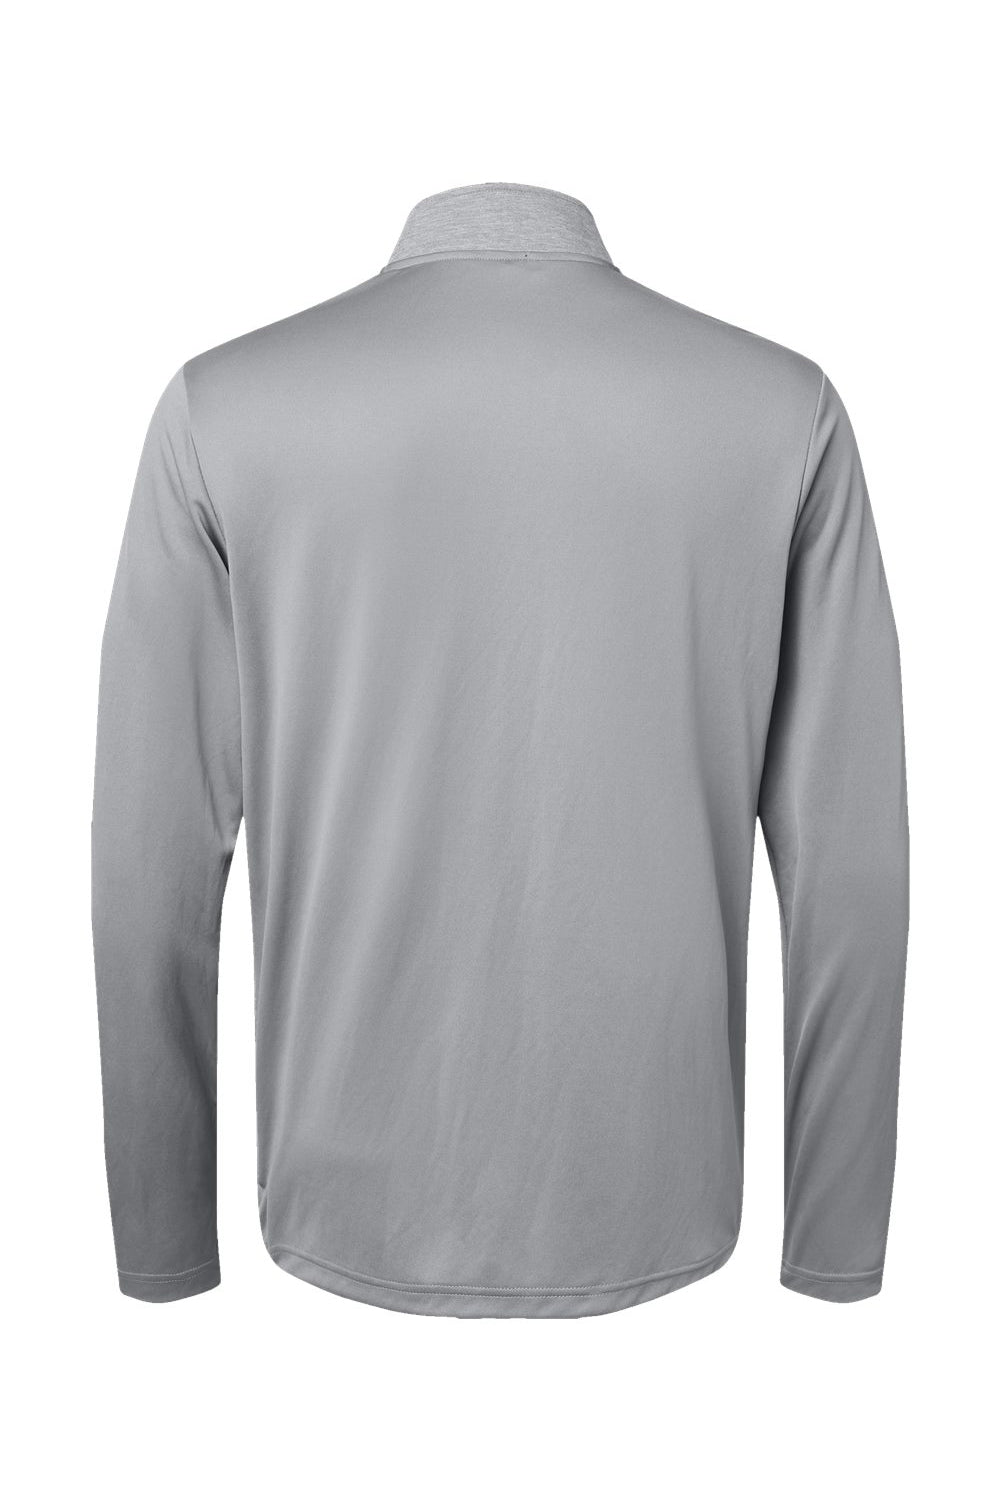 Adidas A522 Mens Heather Block Print Moisture Wicking 1/4 Zip Sweatshirt Grey Melange/Grey/Black Flat Back